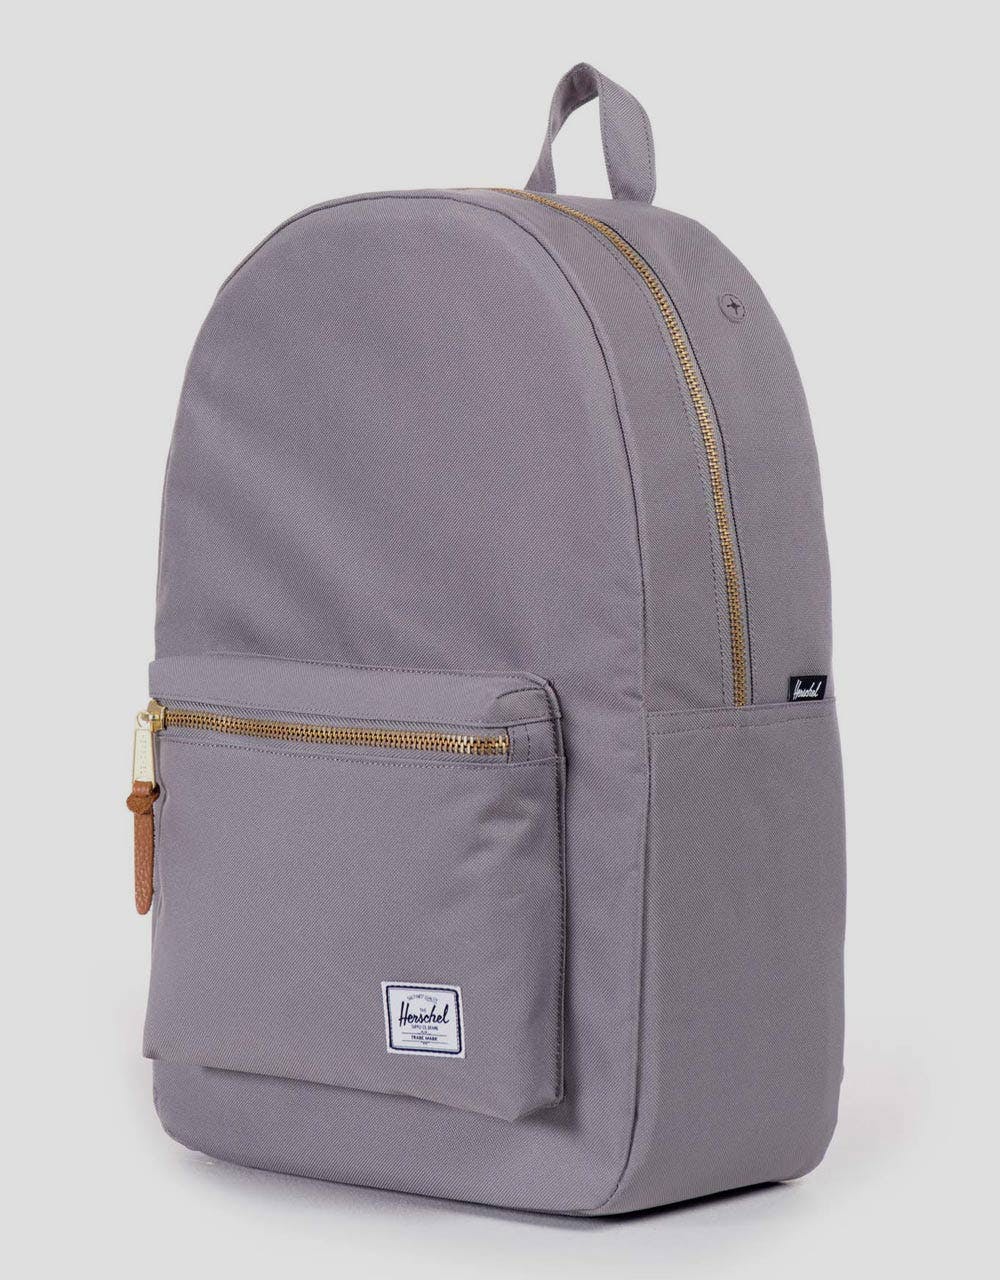 Herschel Supply Co. Settlement Backpack - Grey